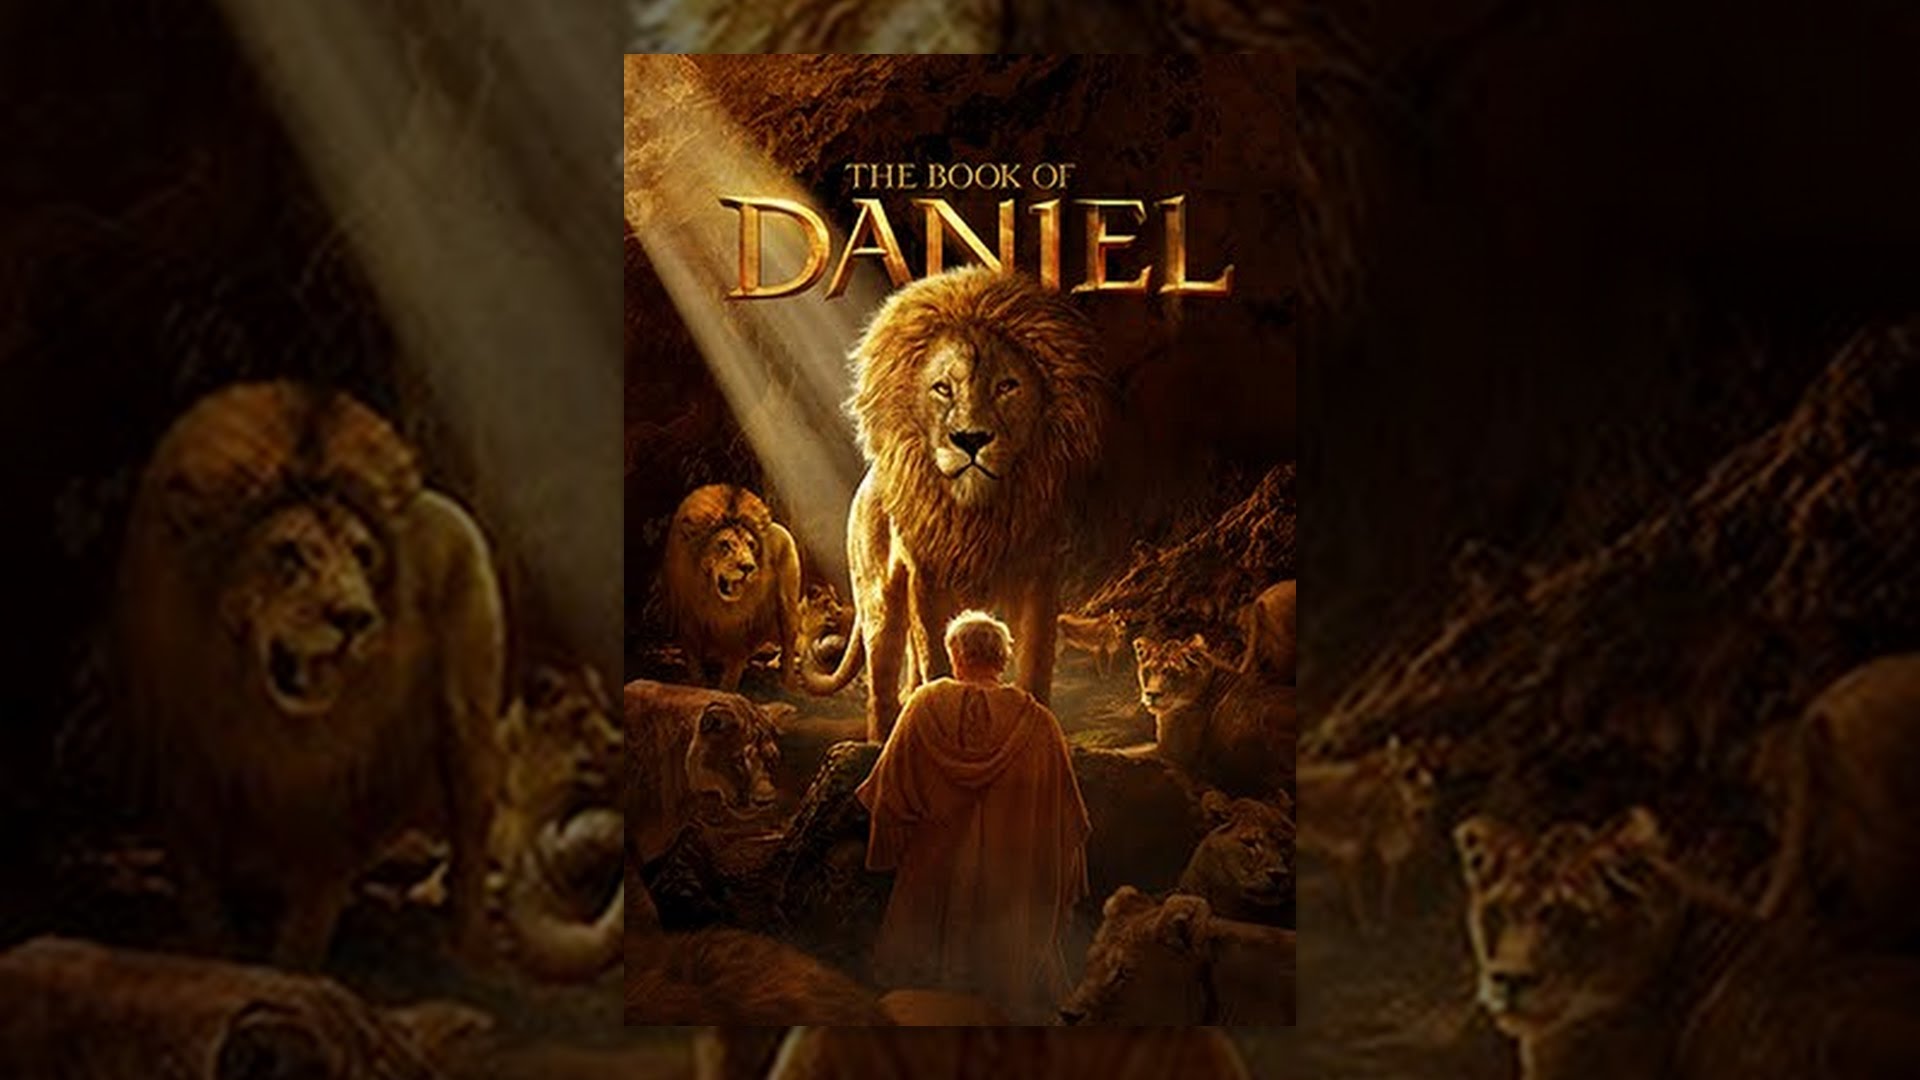 the book of daniel movie cast